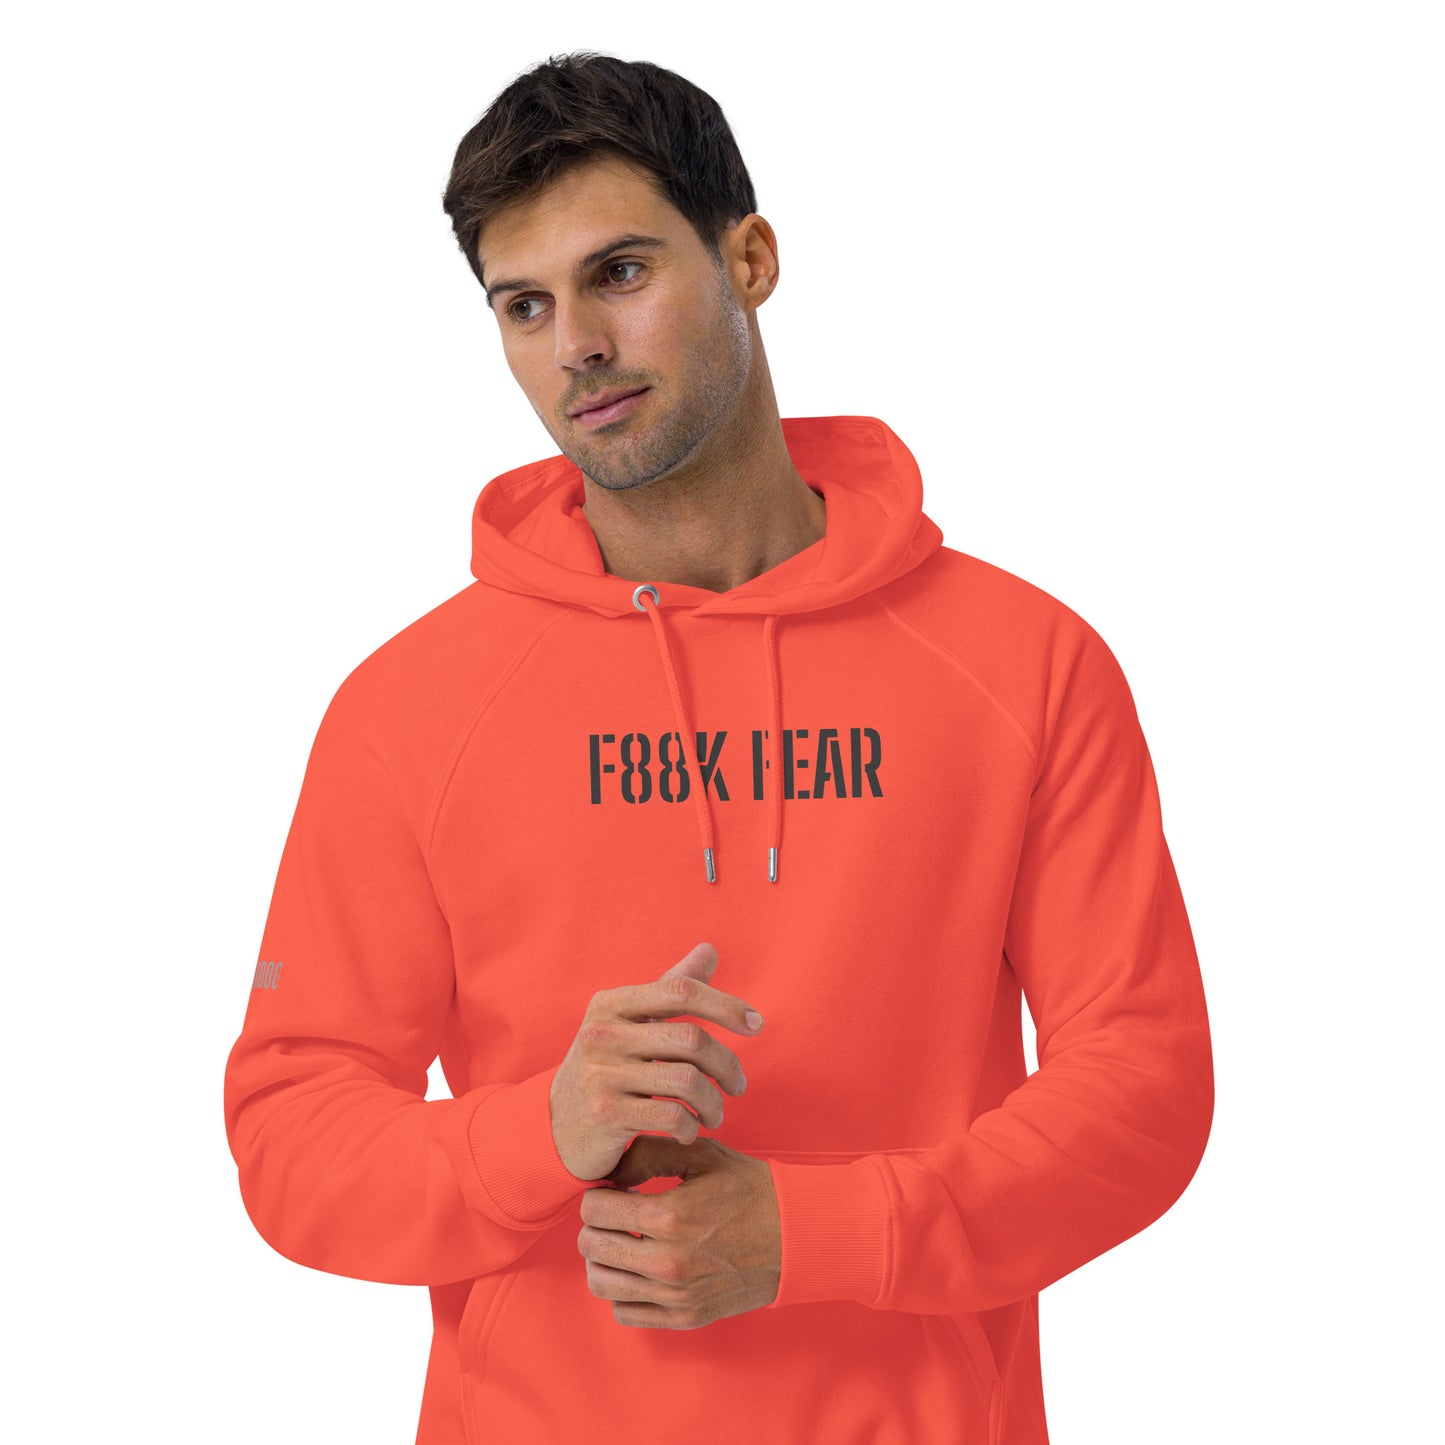 F88K FEAR hoodie